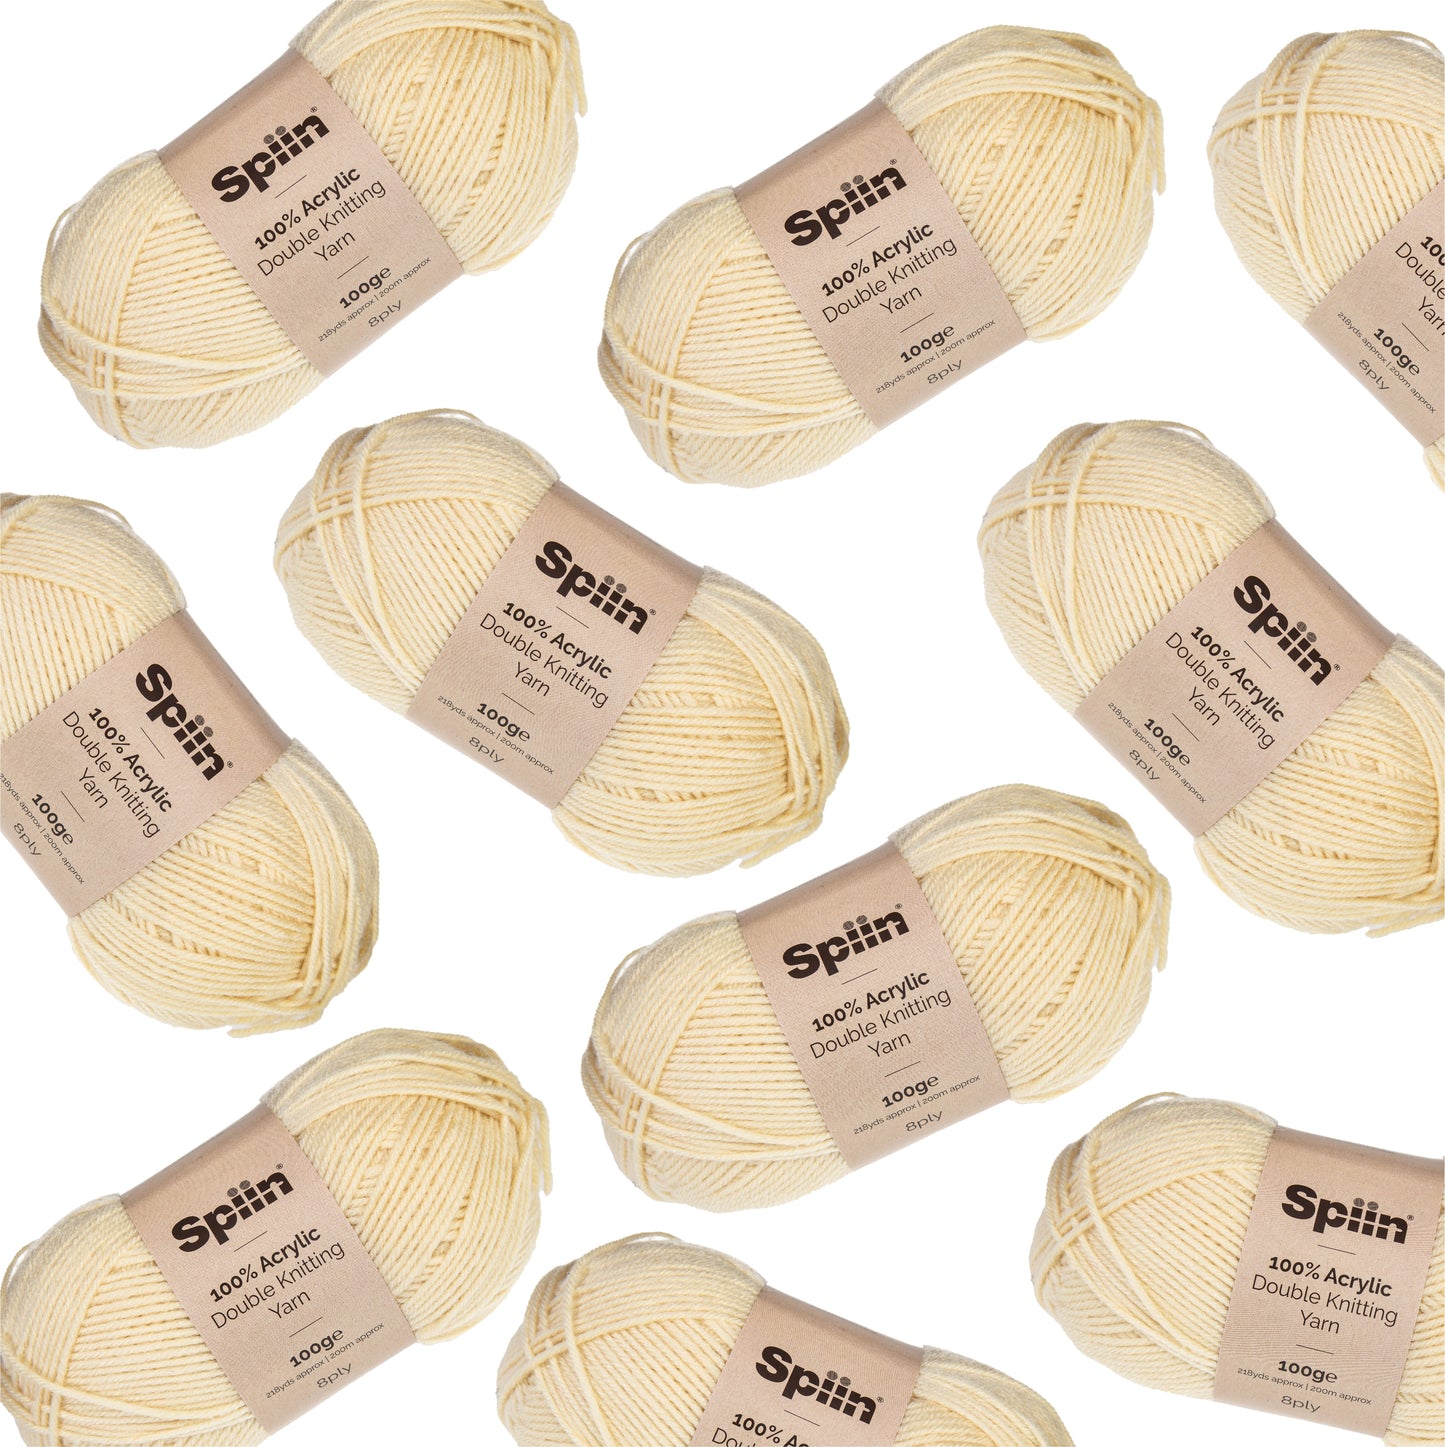 Spiin High Quality Double Knit Yarn - 10x100g Balls Cream